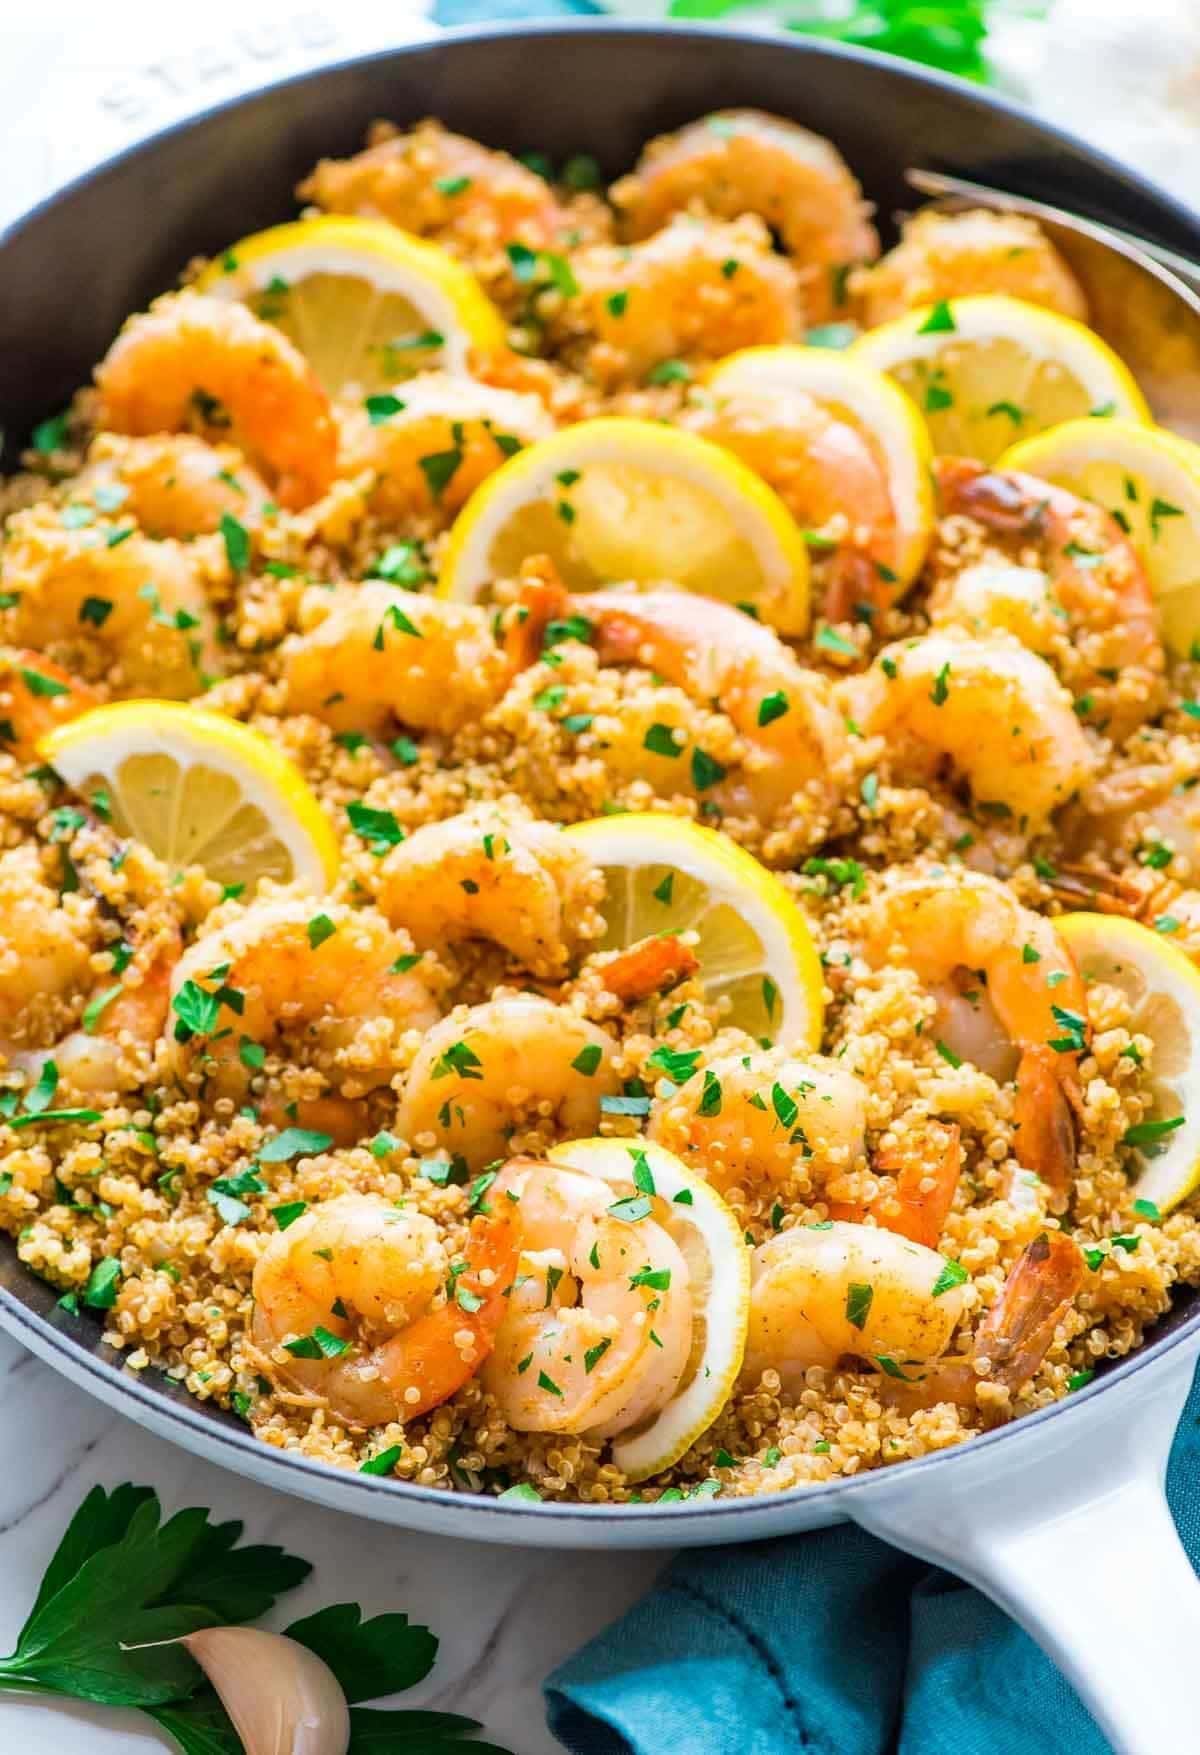 Garlic Shrimp with Quinoa garnish with lemon slices